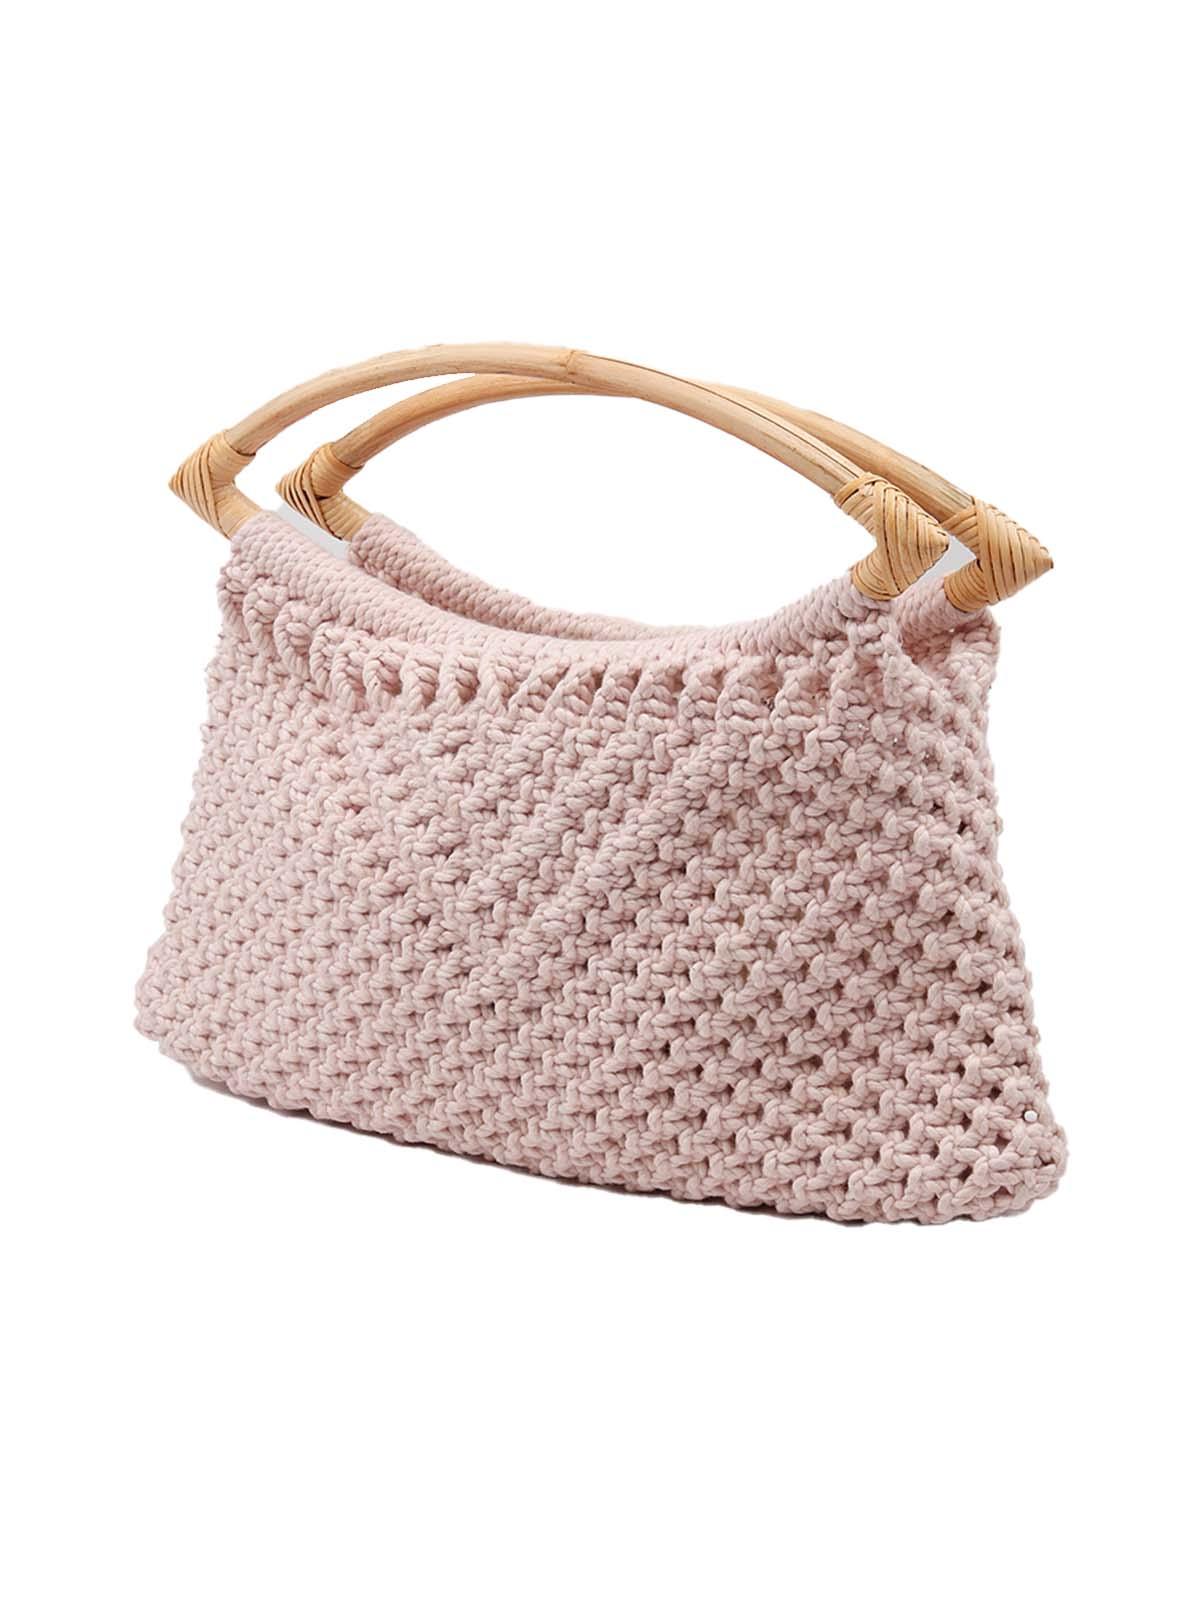 Stunning crochet baby pink handle bag - Odette